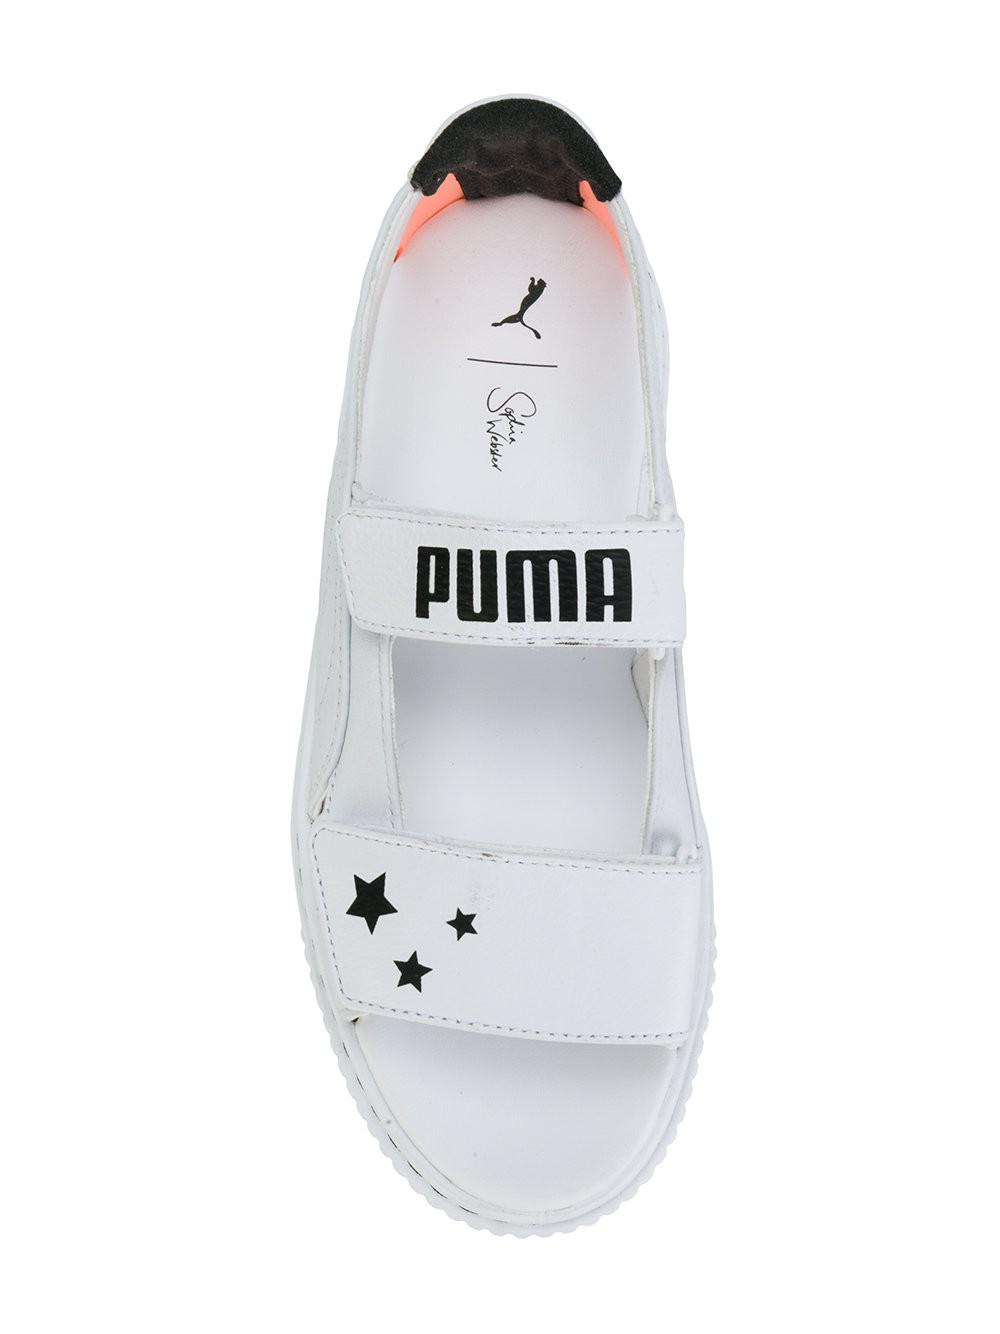 PUMA Open Toe Strap Sneakers in White | Lyst